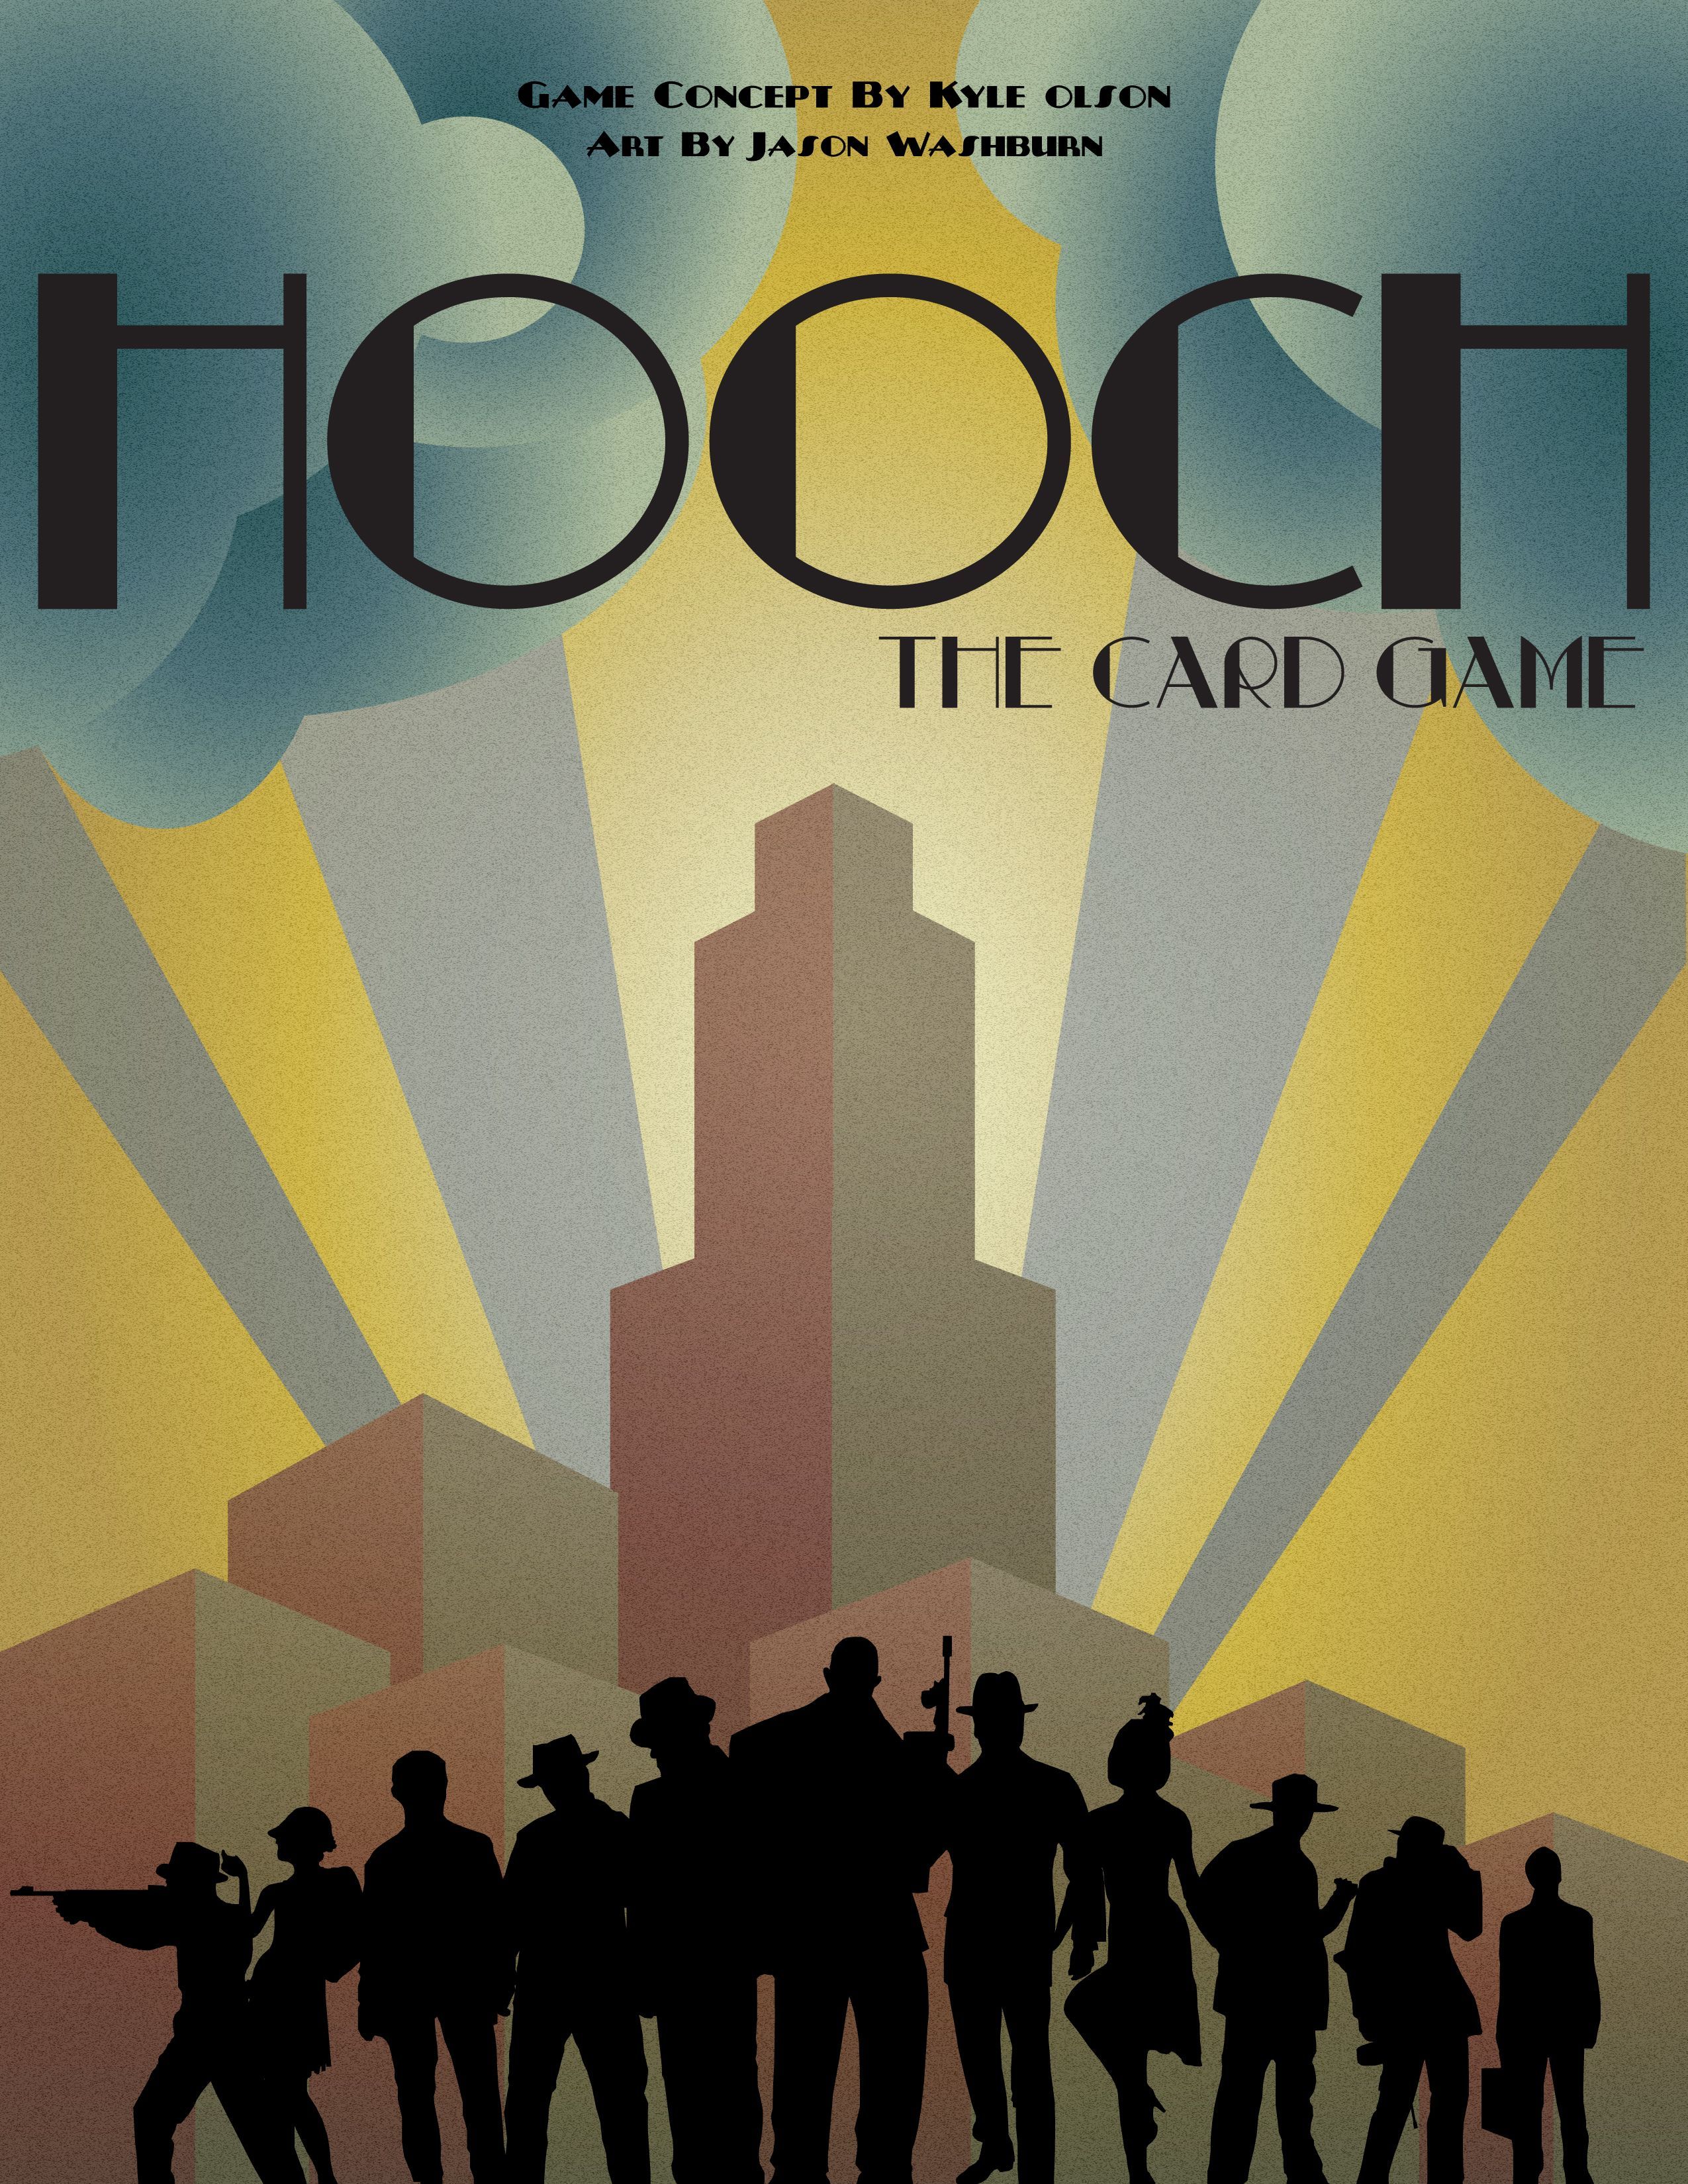 Hooch, The Card Game